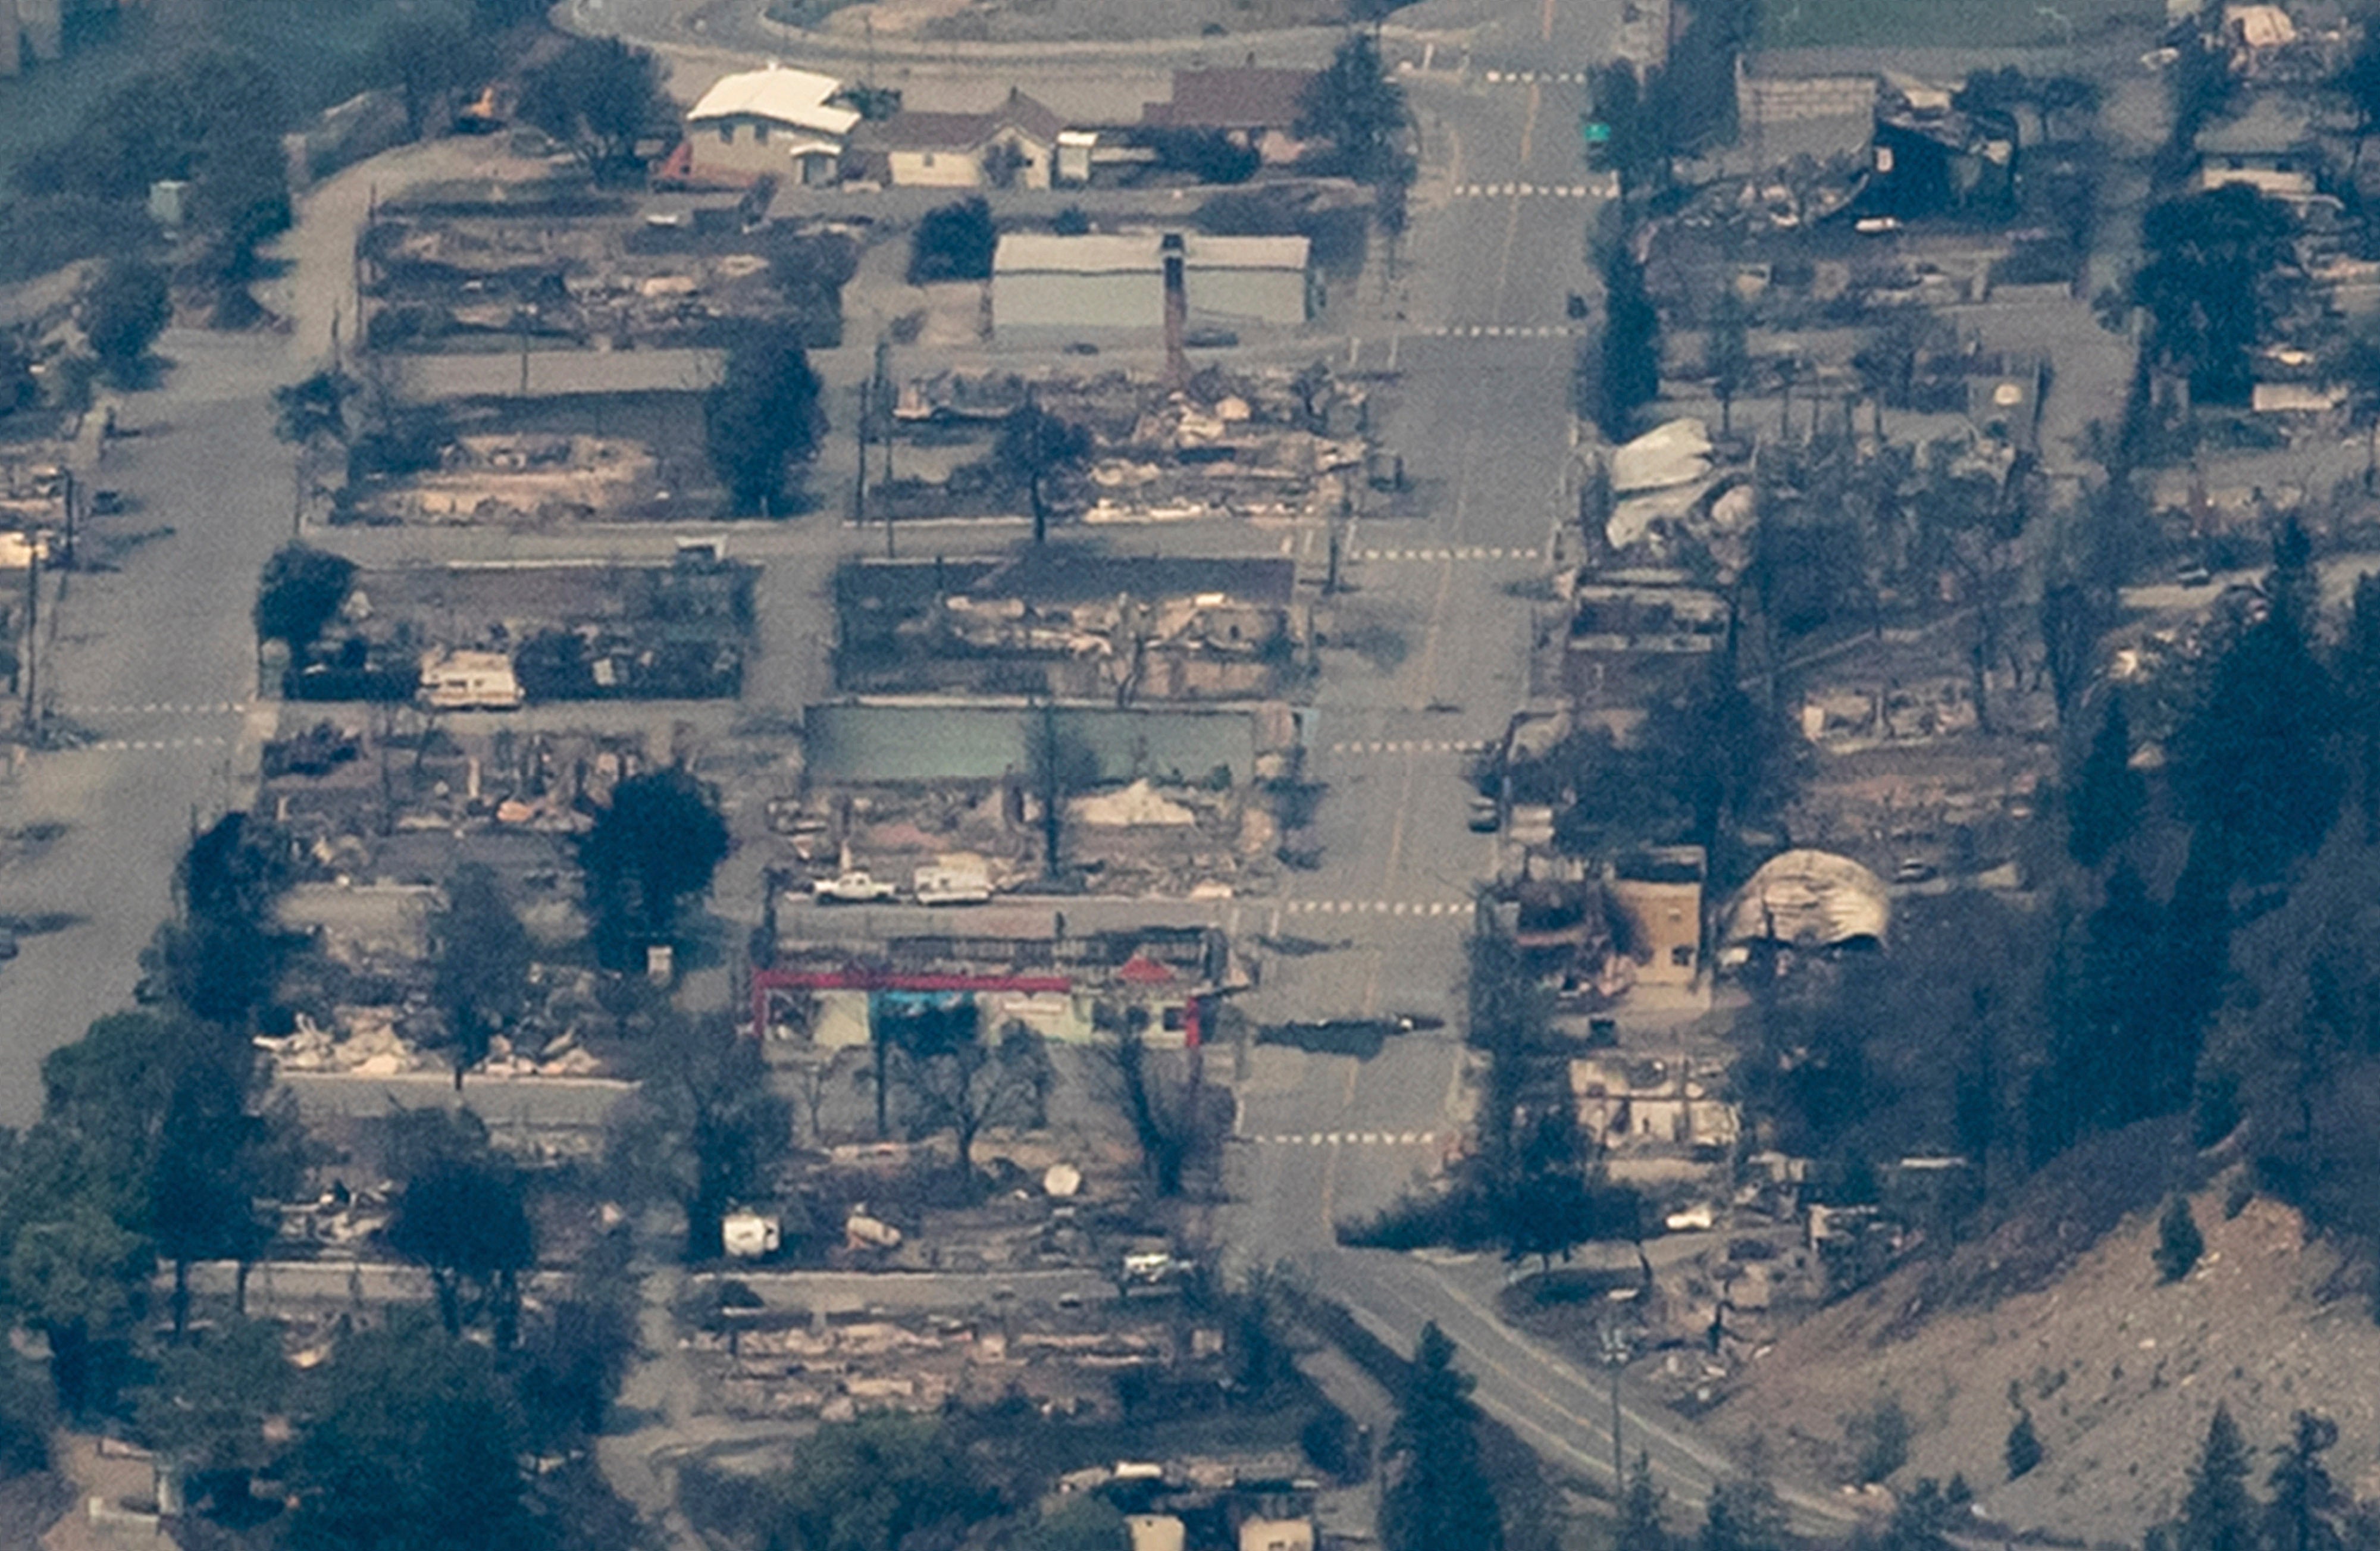 Destroyed town of Lytton, British Columbia